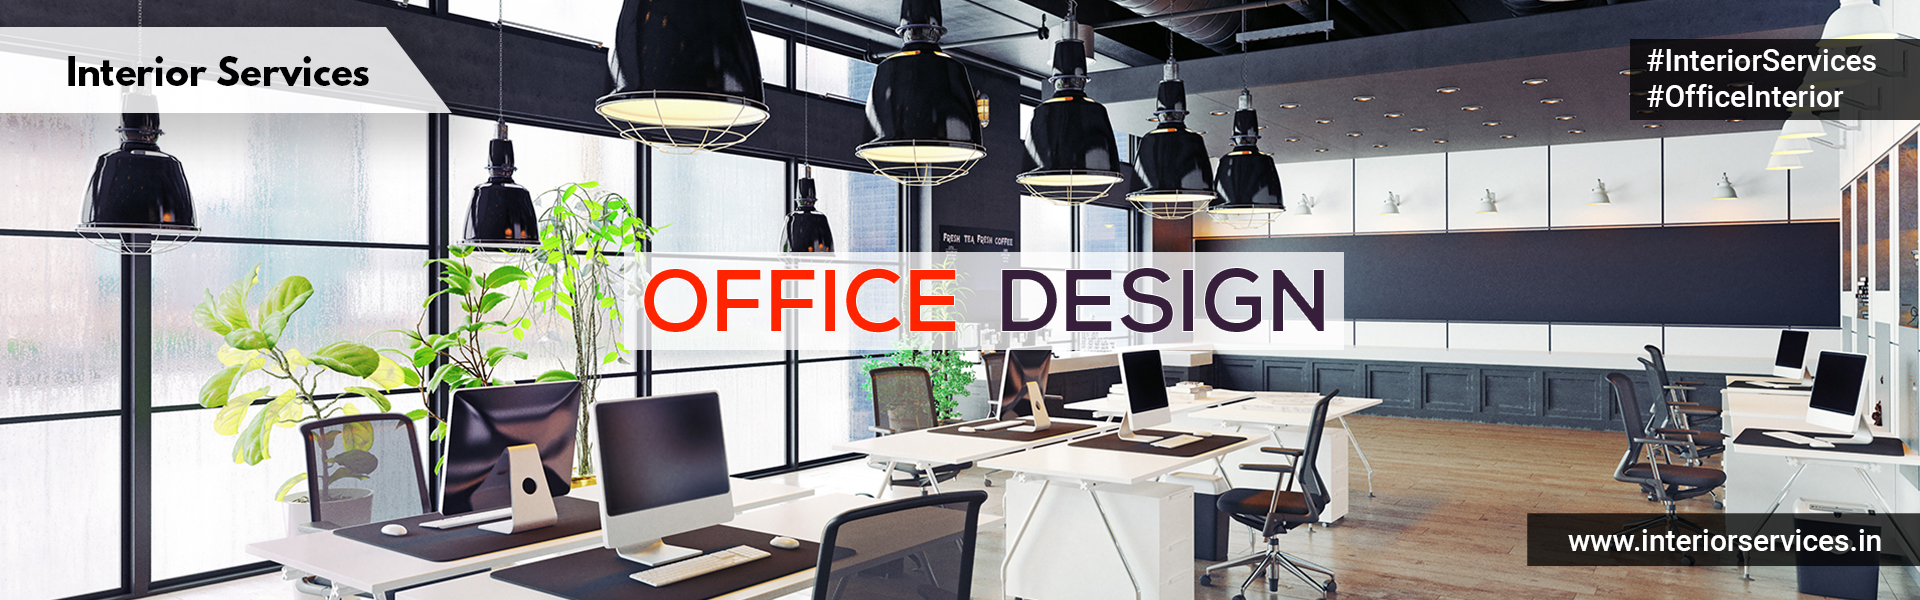 Interior Services Office Design Image